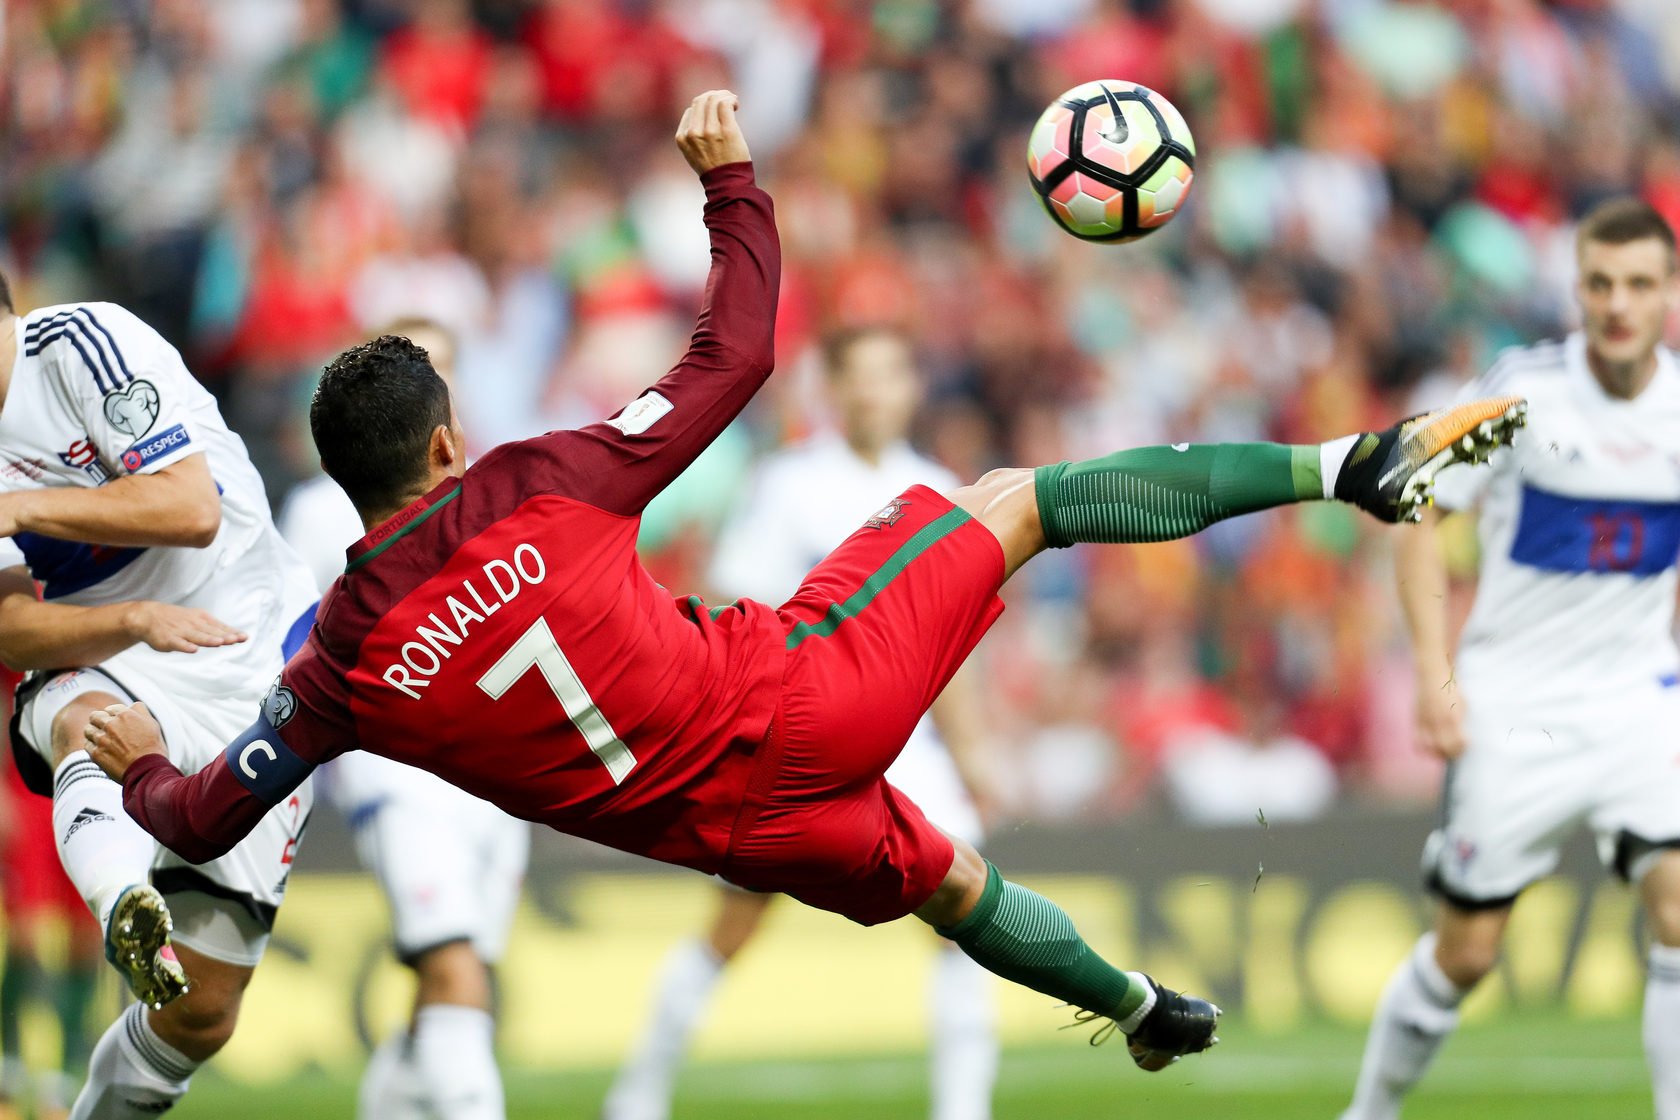 Футбол футбол прямо сейчас играем. Футболист Роналдо удар через себя. Криштиану Роналду удар через себя. Криштиану Роналду лучшие голы. Cristiano Ronaldo 2018 удар через себя.